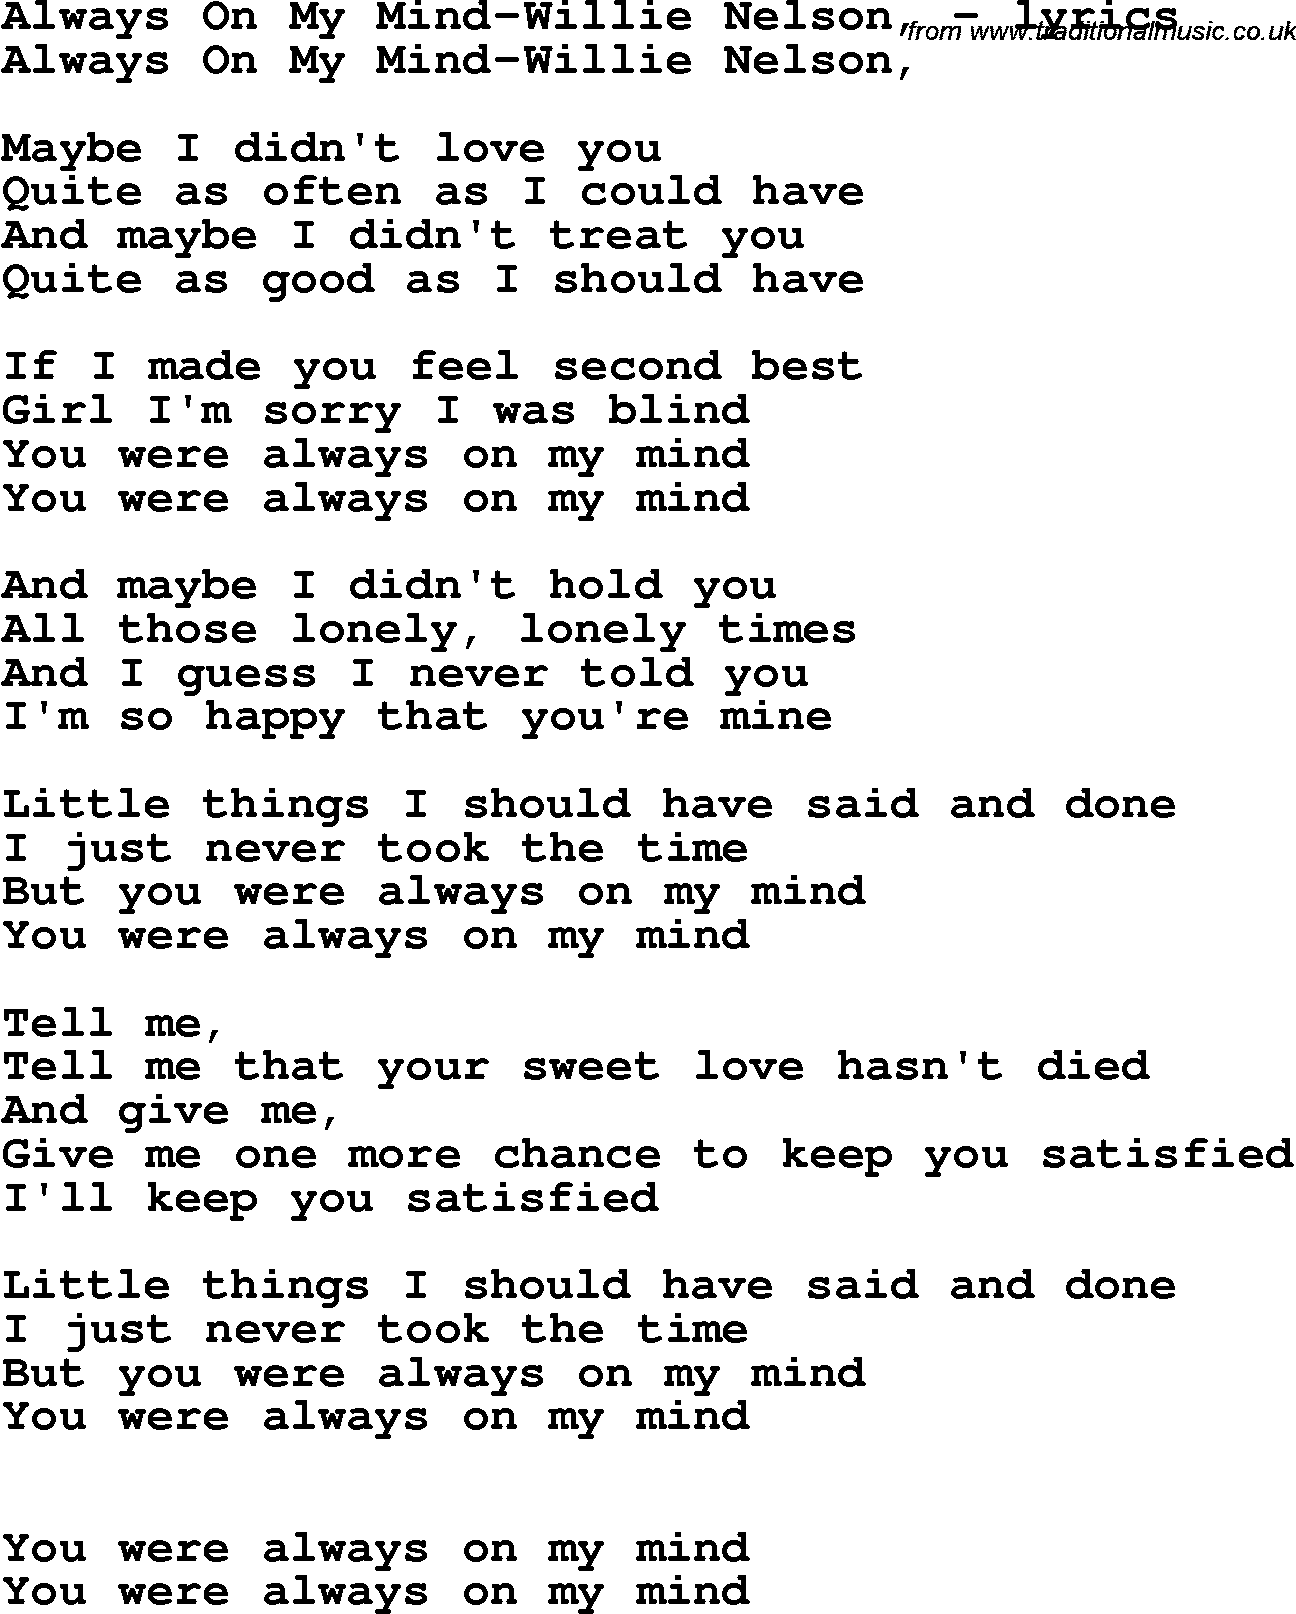 Love Song Lyrics for: Always On My Mind-Willie Nelson,